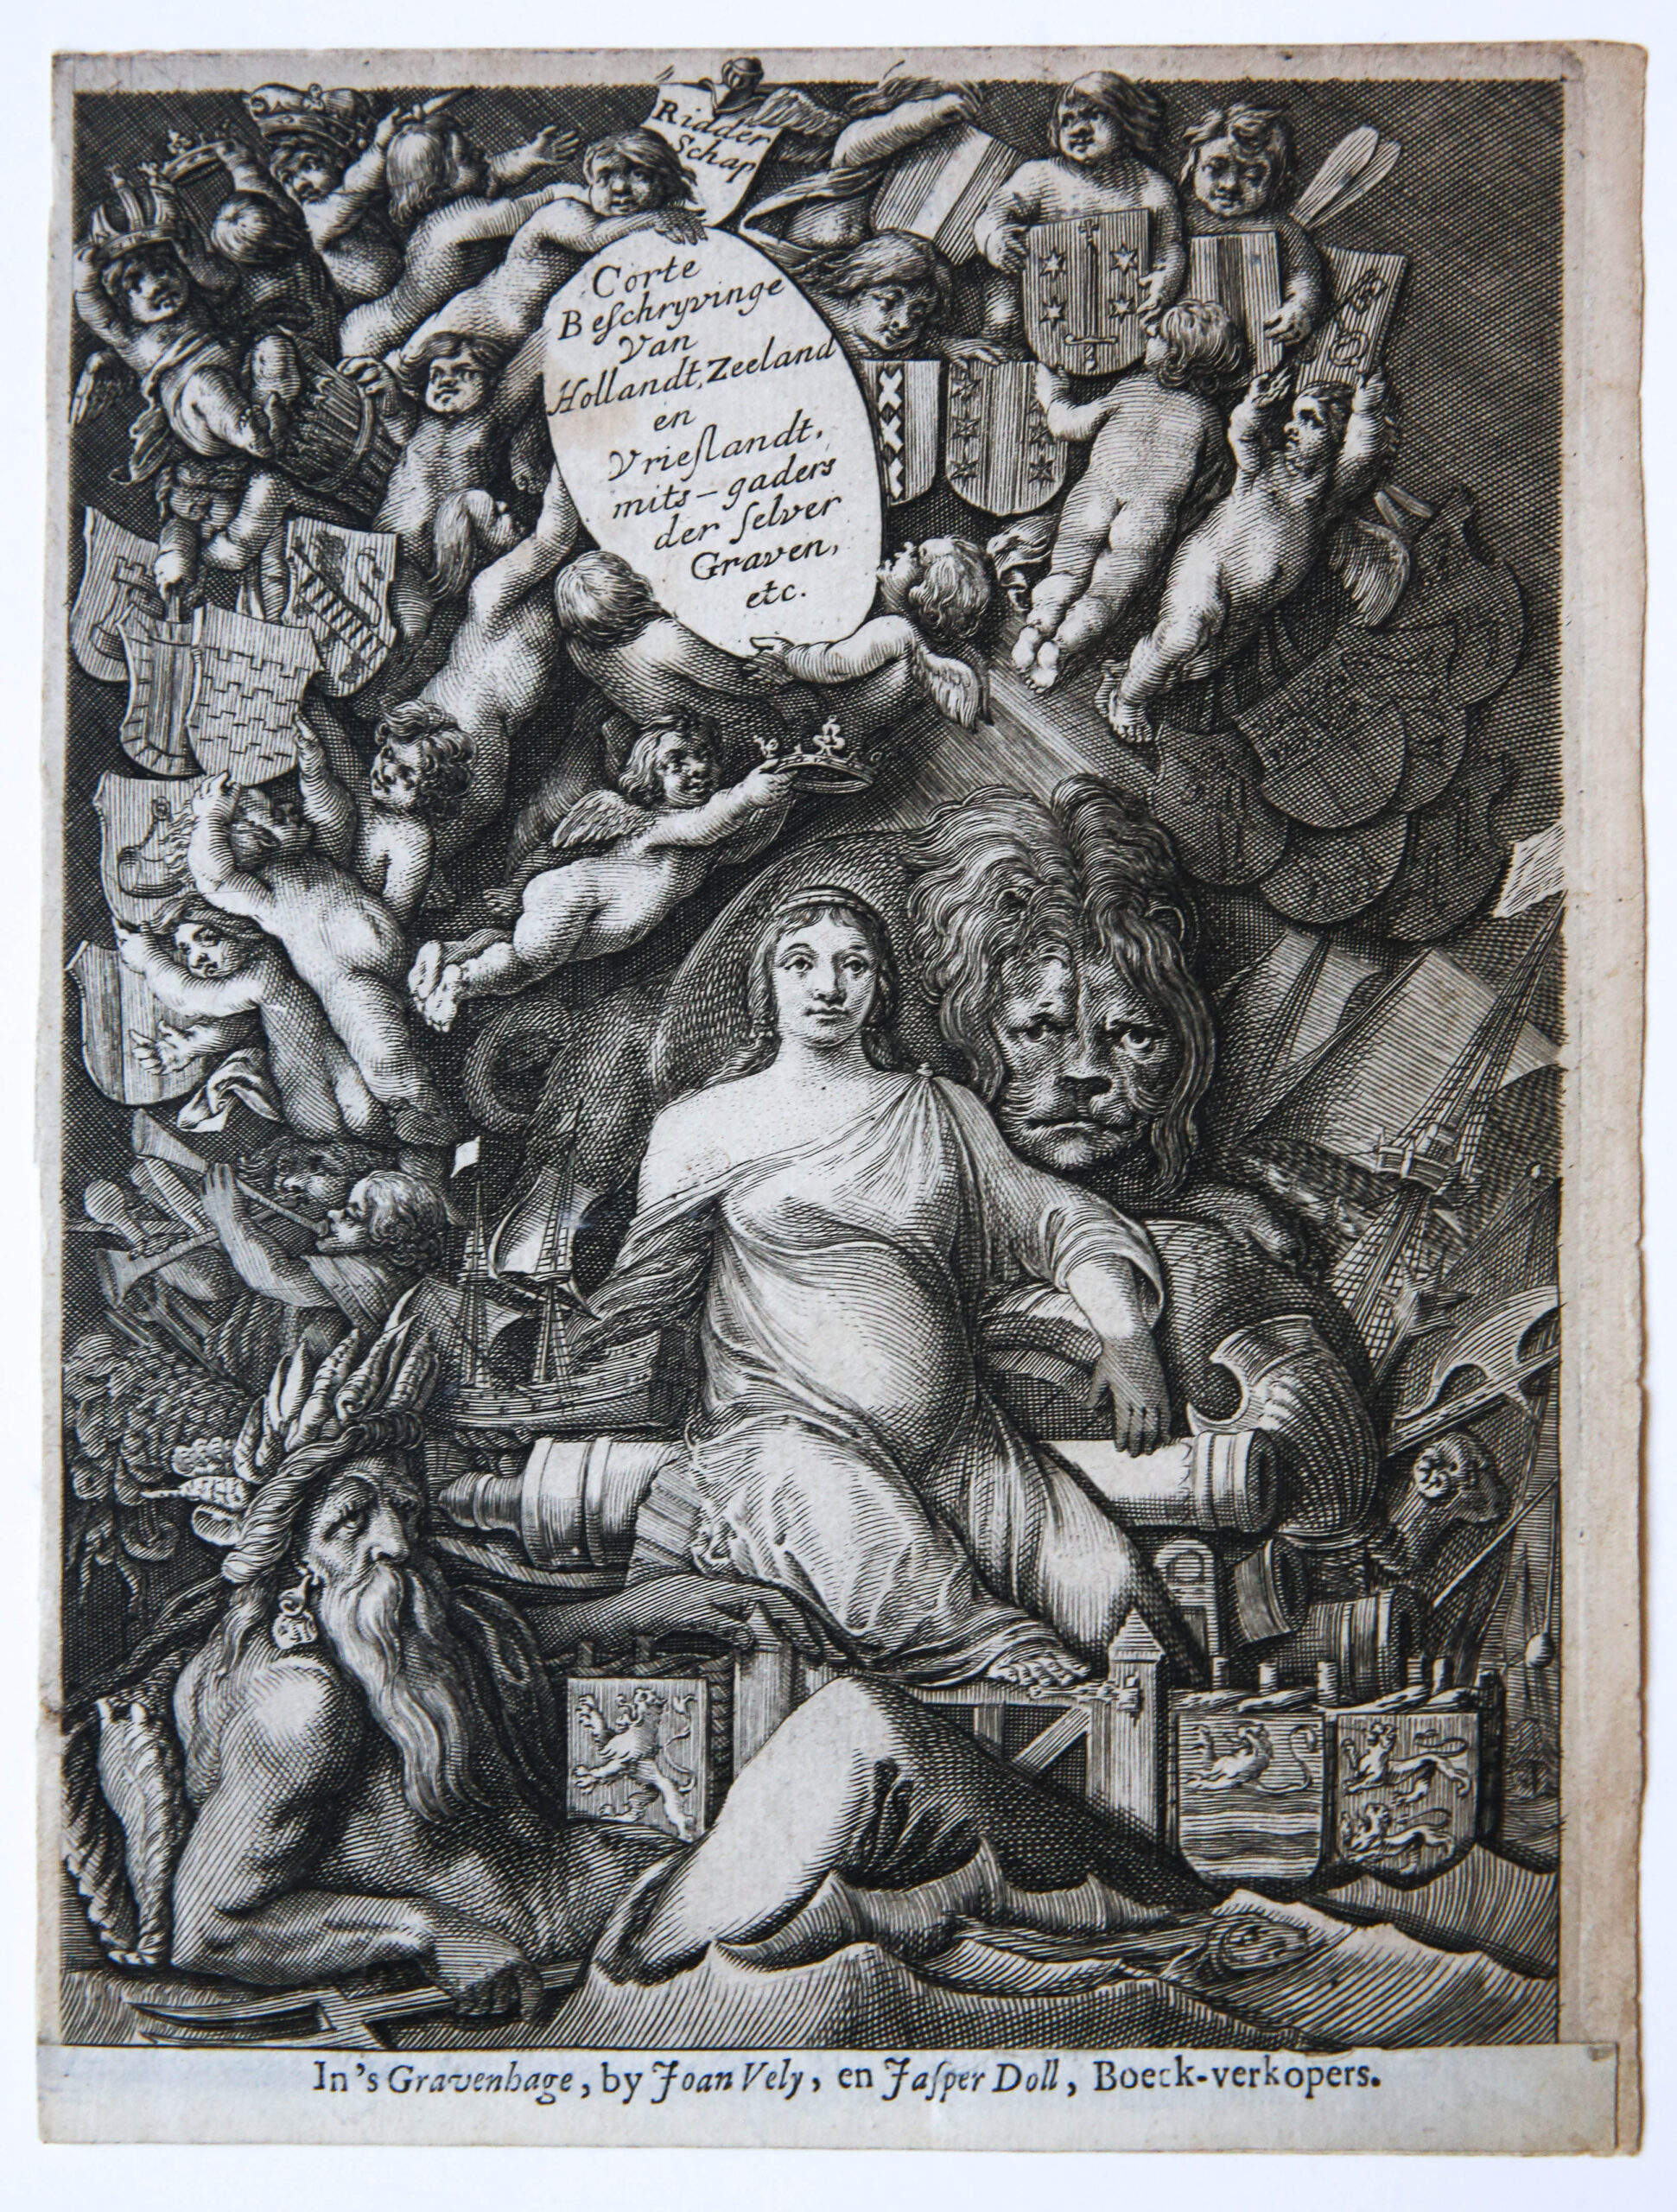 [Antique title page, 1677/78] Hollandsche, Zeelandsche ende Vriesche Chronyck, published 1677/78, 1 p.